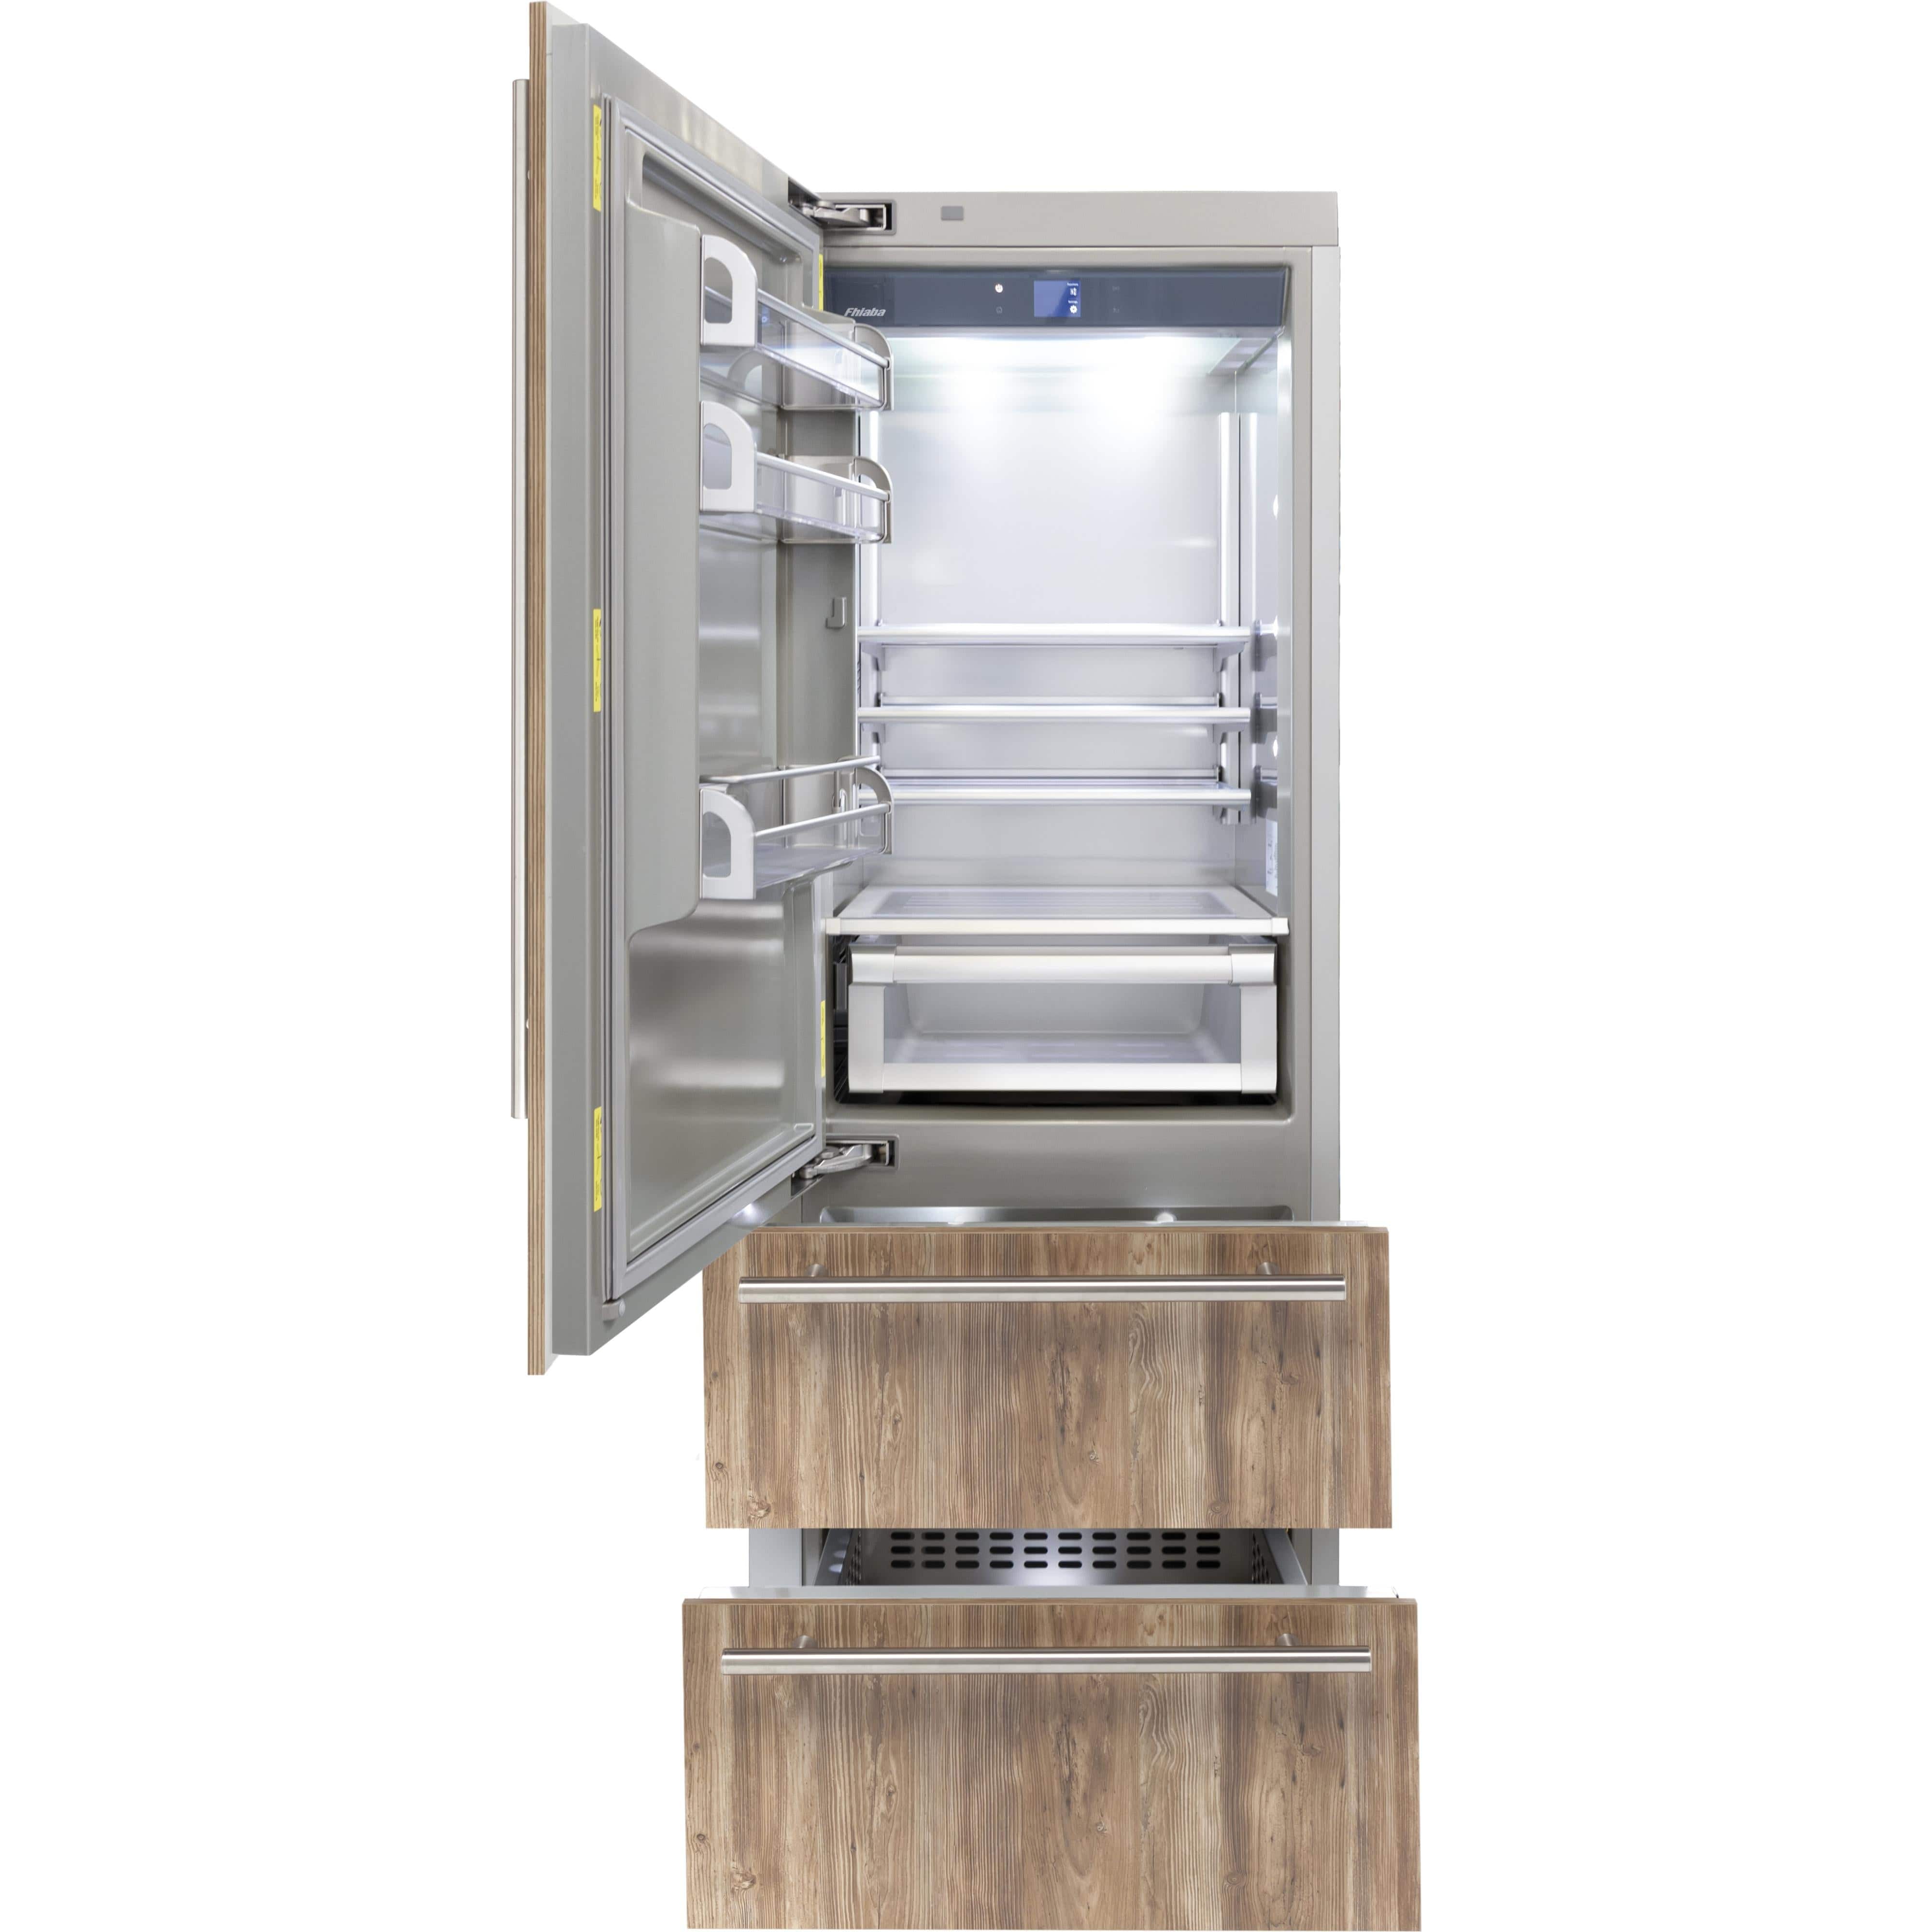 Fhiaba 30-inch Bottom Freezer Refrigerator FI30BDI-LO1 Refrigerators FI30BDILO1 Luxury Appliances Direct